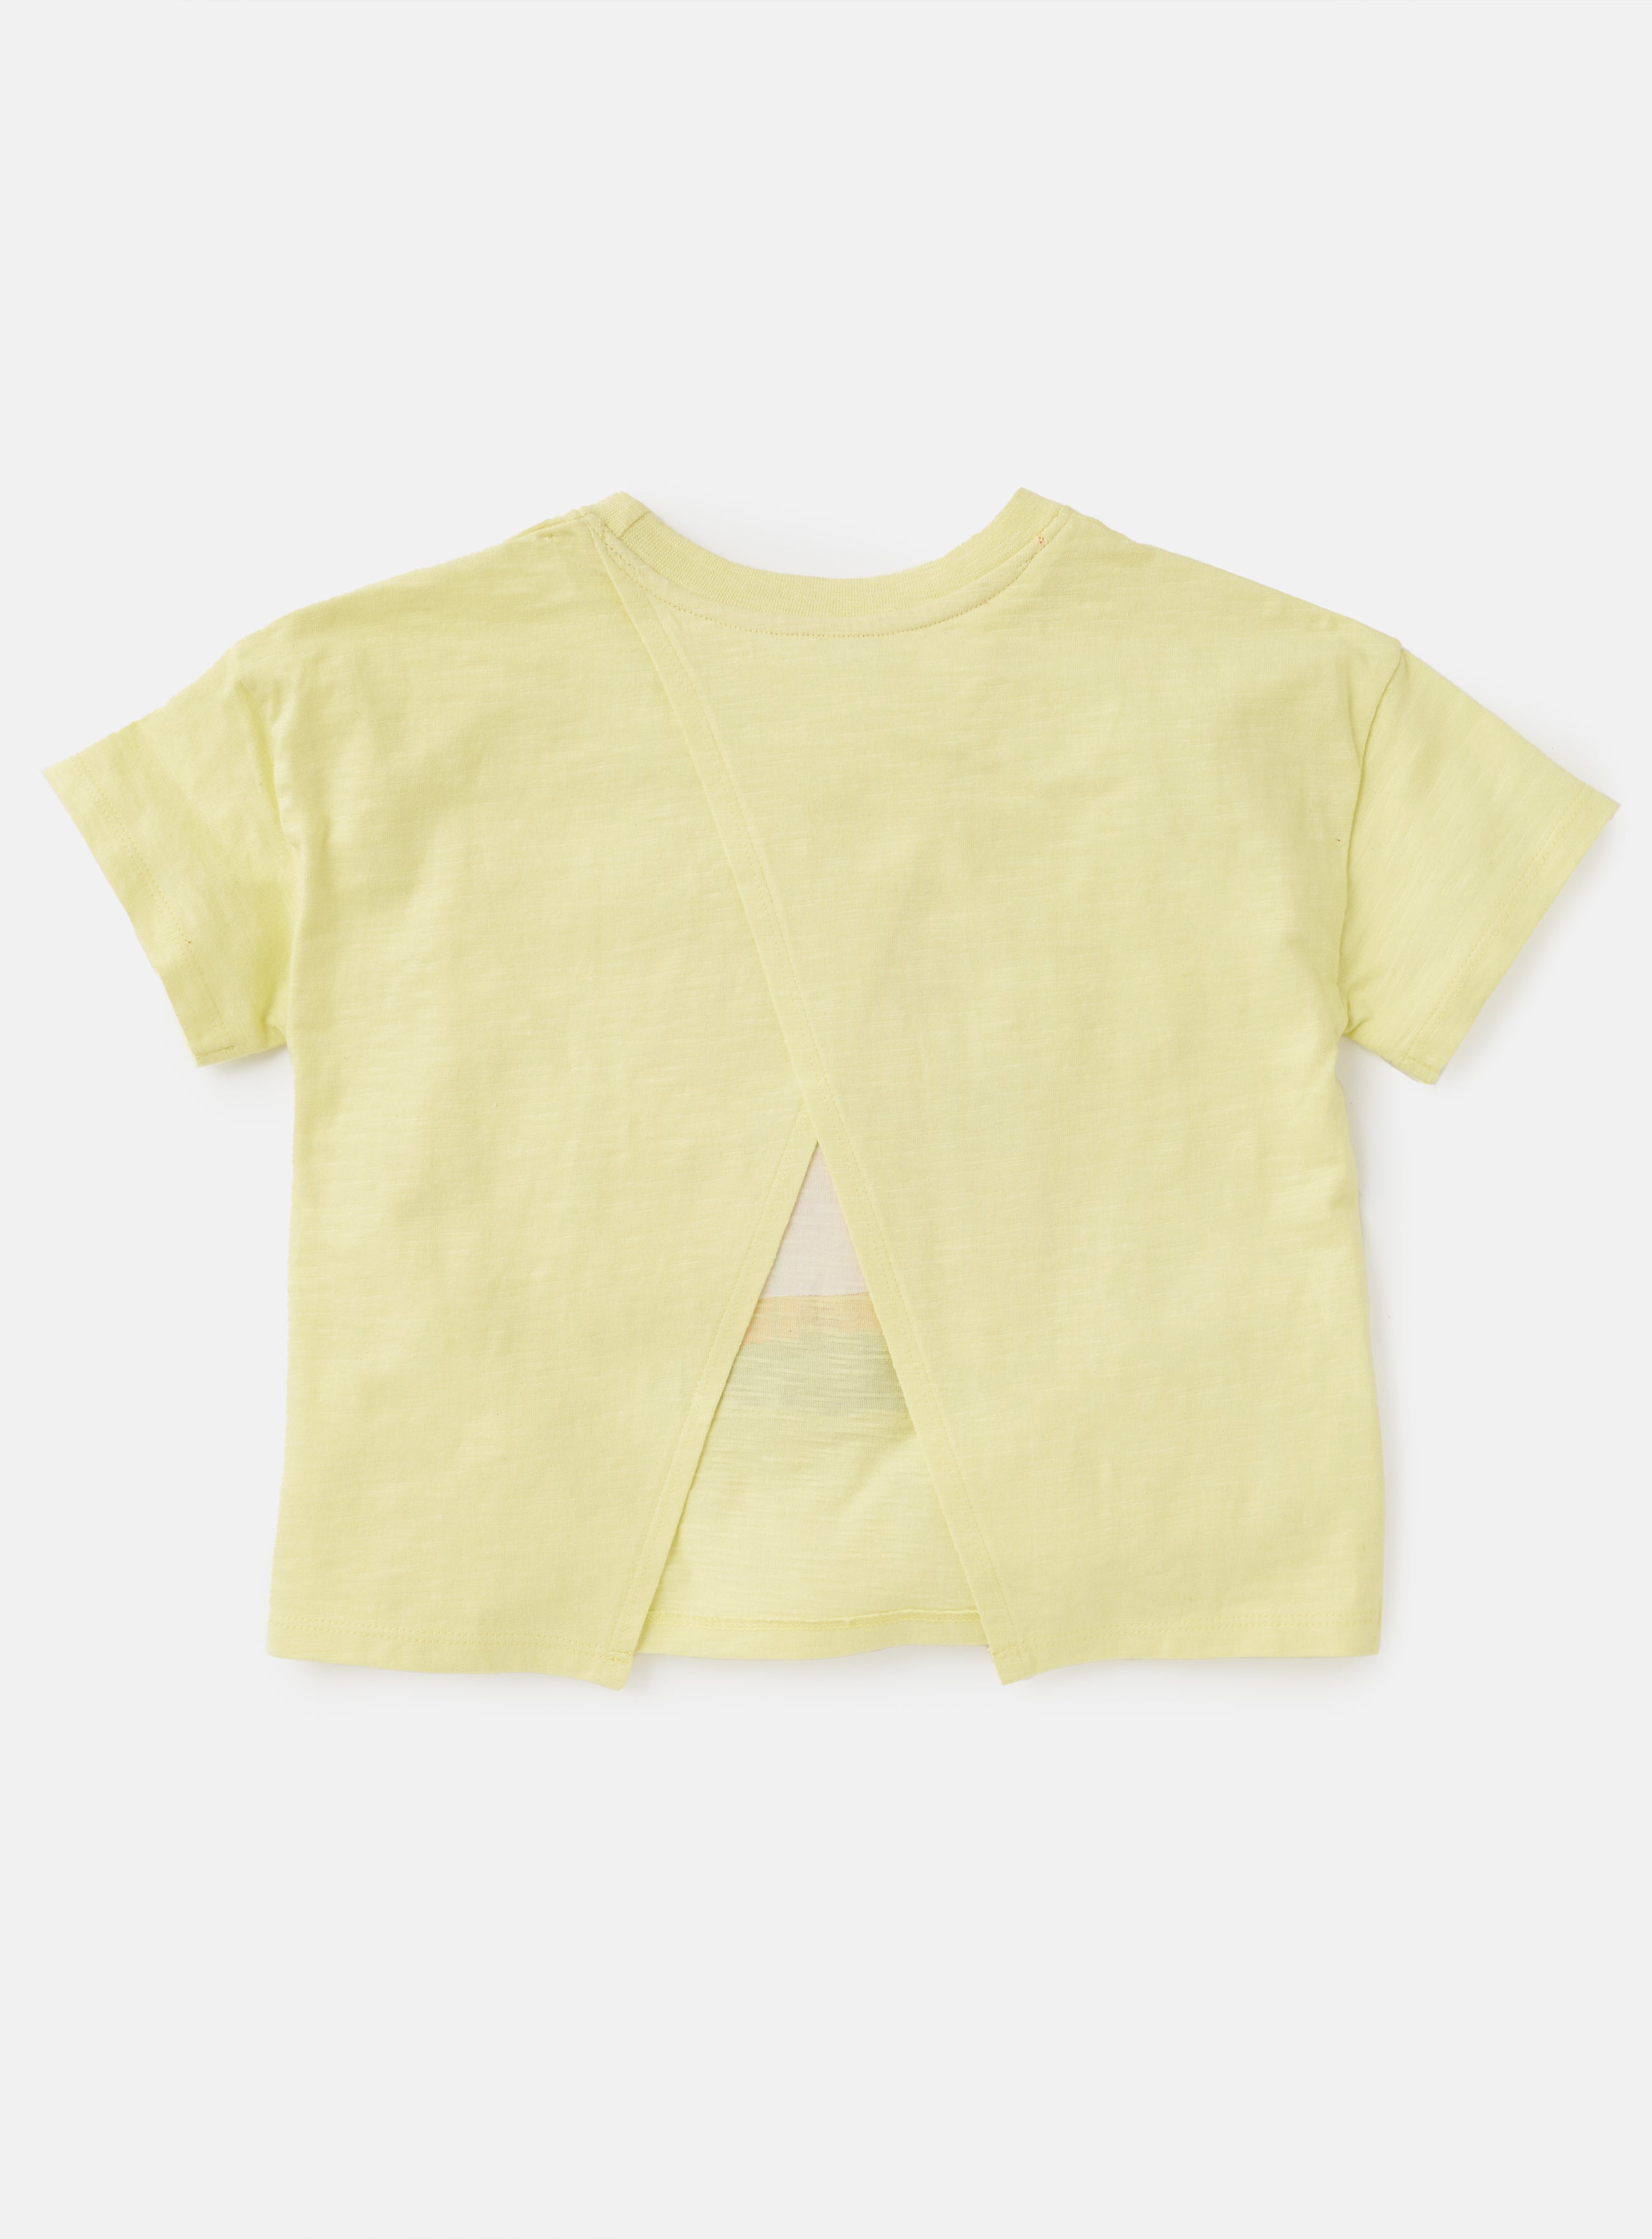 Girls Sequin Embellished Cotton Yellow Cross Back T-Shirt